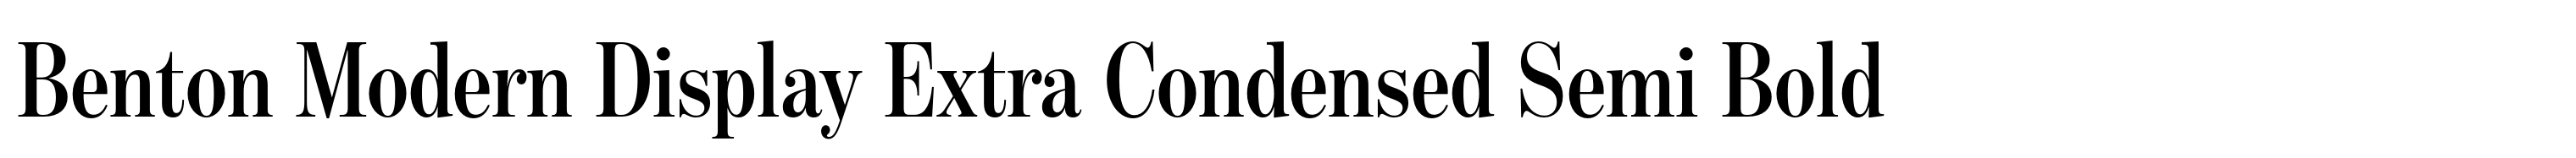 Benton Modern Display Extra Condensed Semi Bold